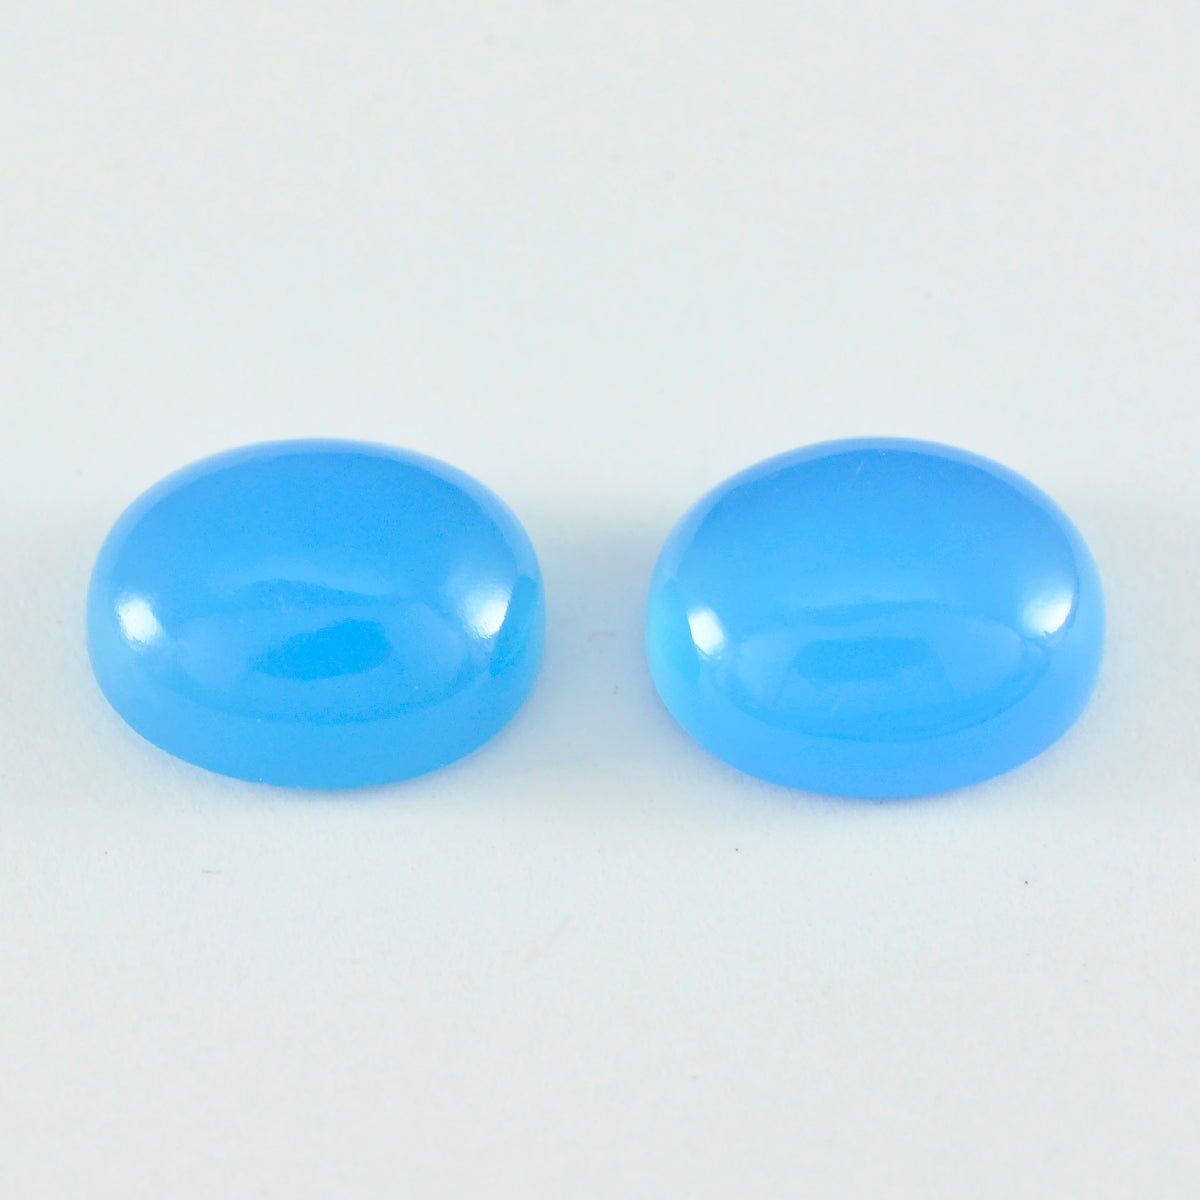 Riyogems 1PC blauwe chalcedoon cabochon 8x10 mm ovale vorm geweldige kwaliteit losse edelsteen